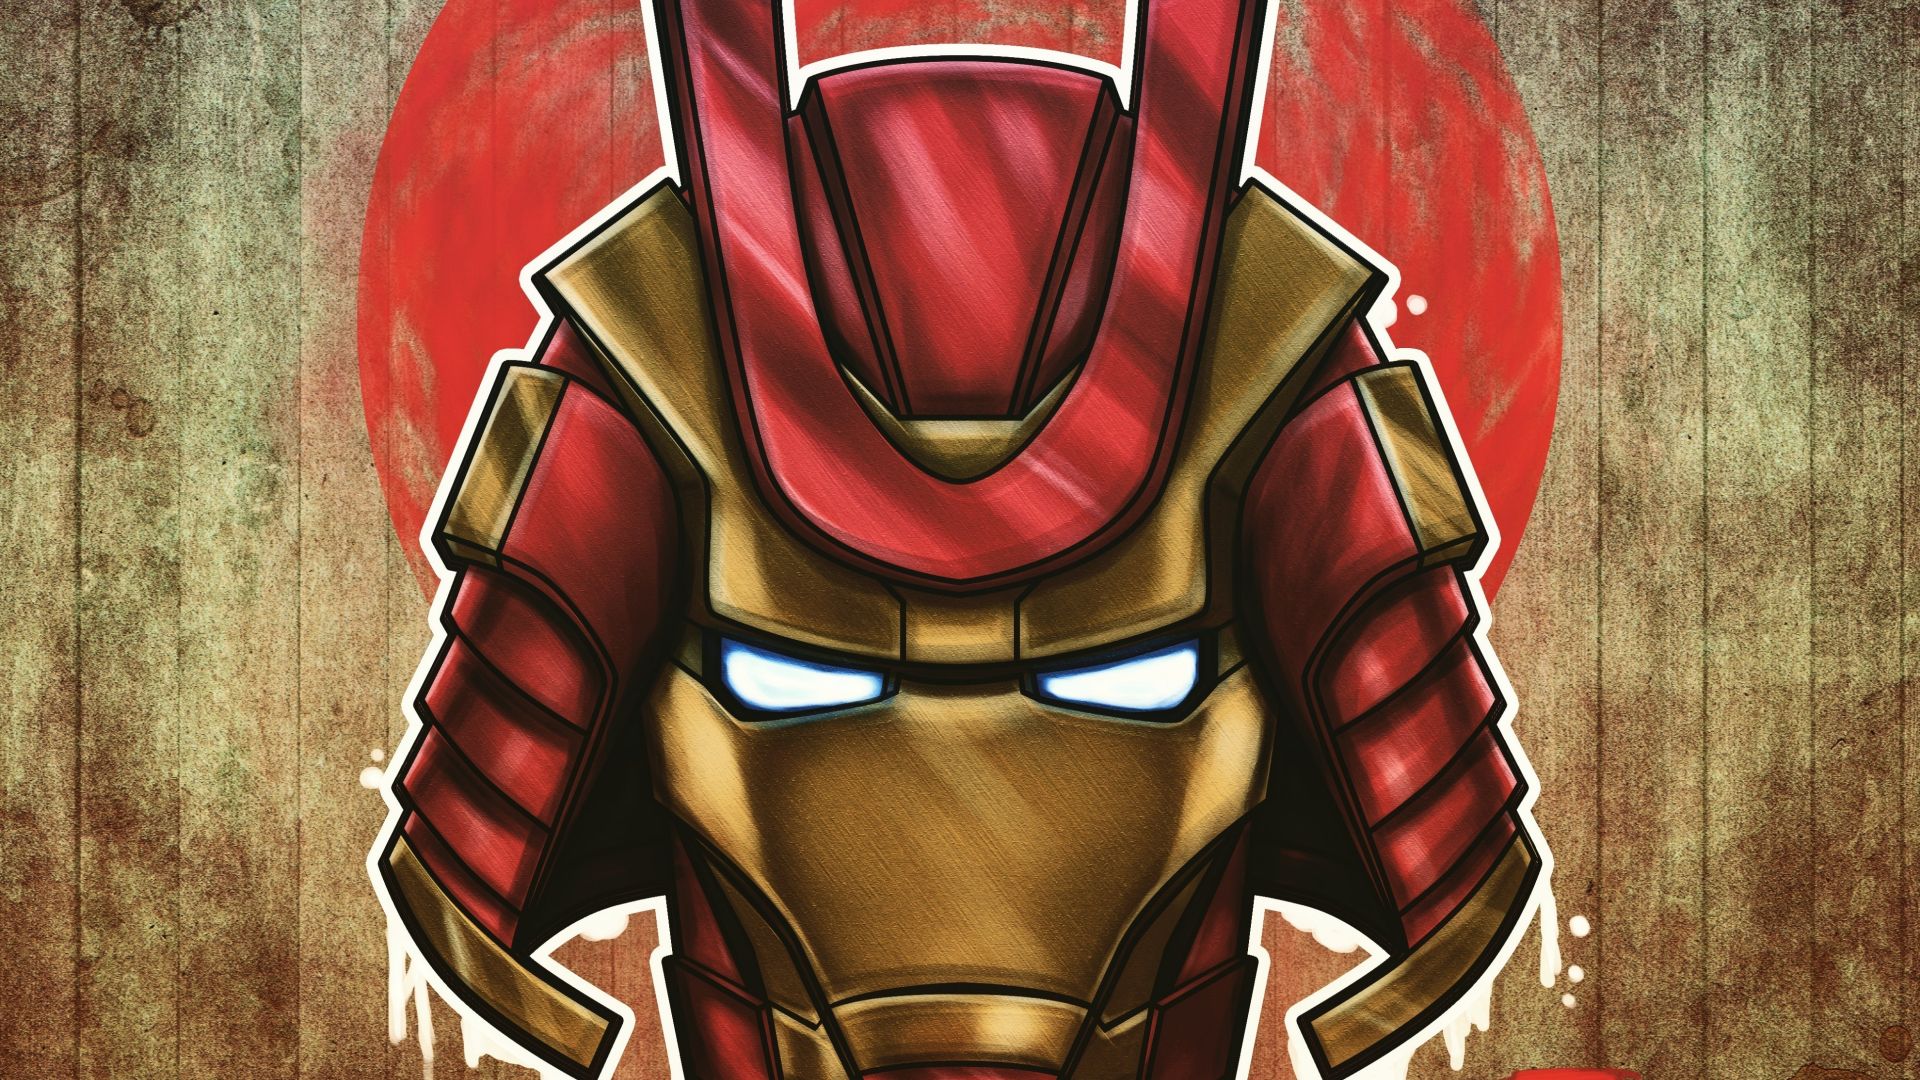 Desktop Wallpaper Marvel Samurai Iron Man Art 4k Hd Image Picture Background 48de5b